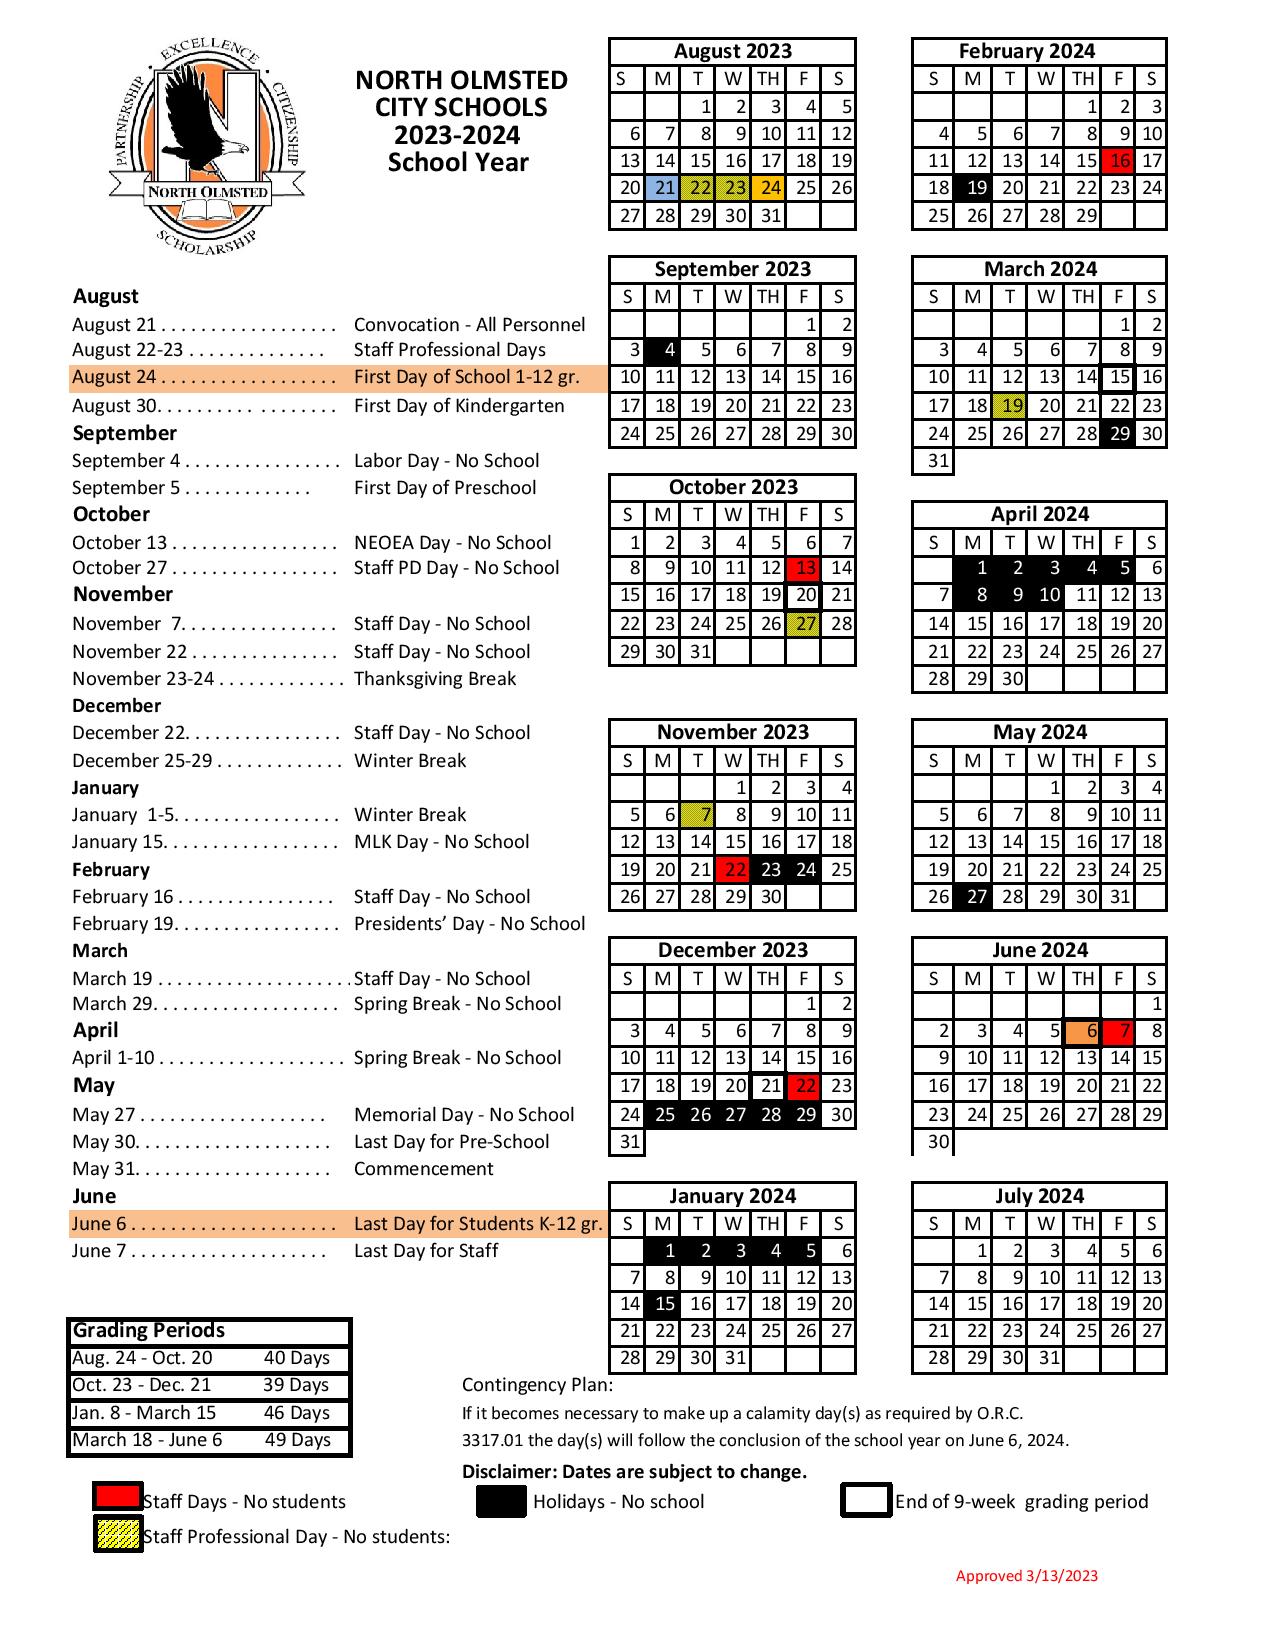 North Olmsted City Schools Calendar 2023 2024 in PDF